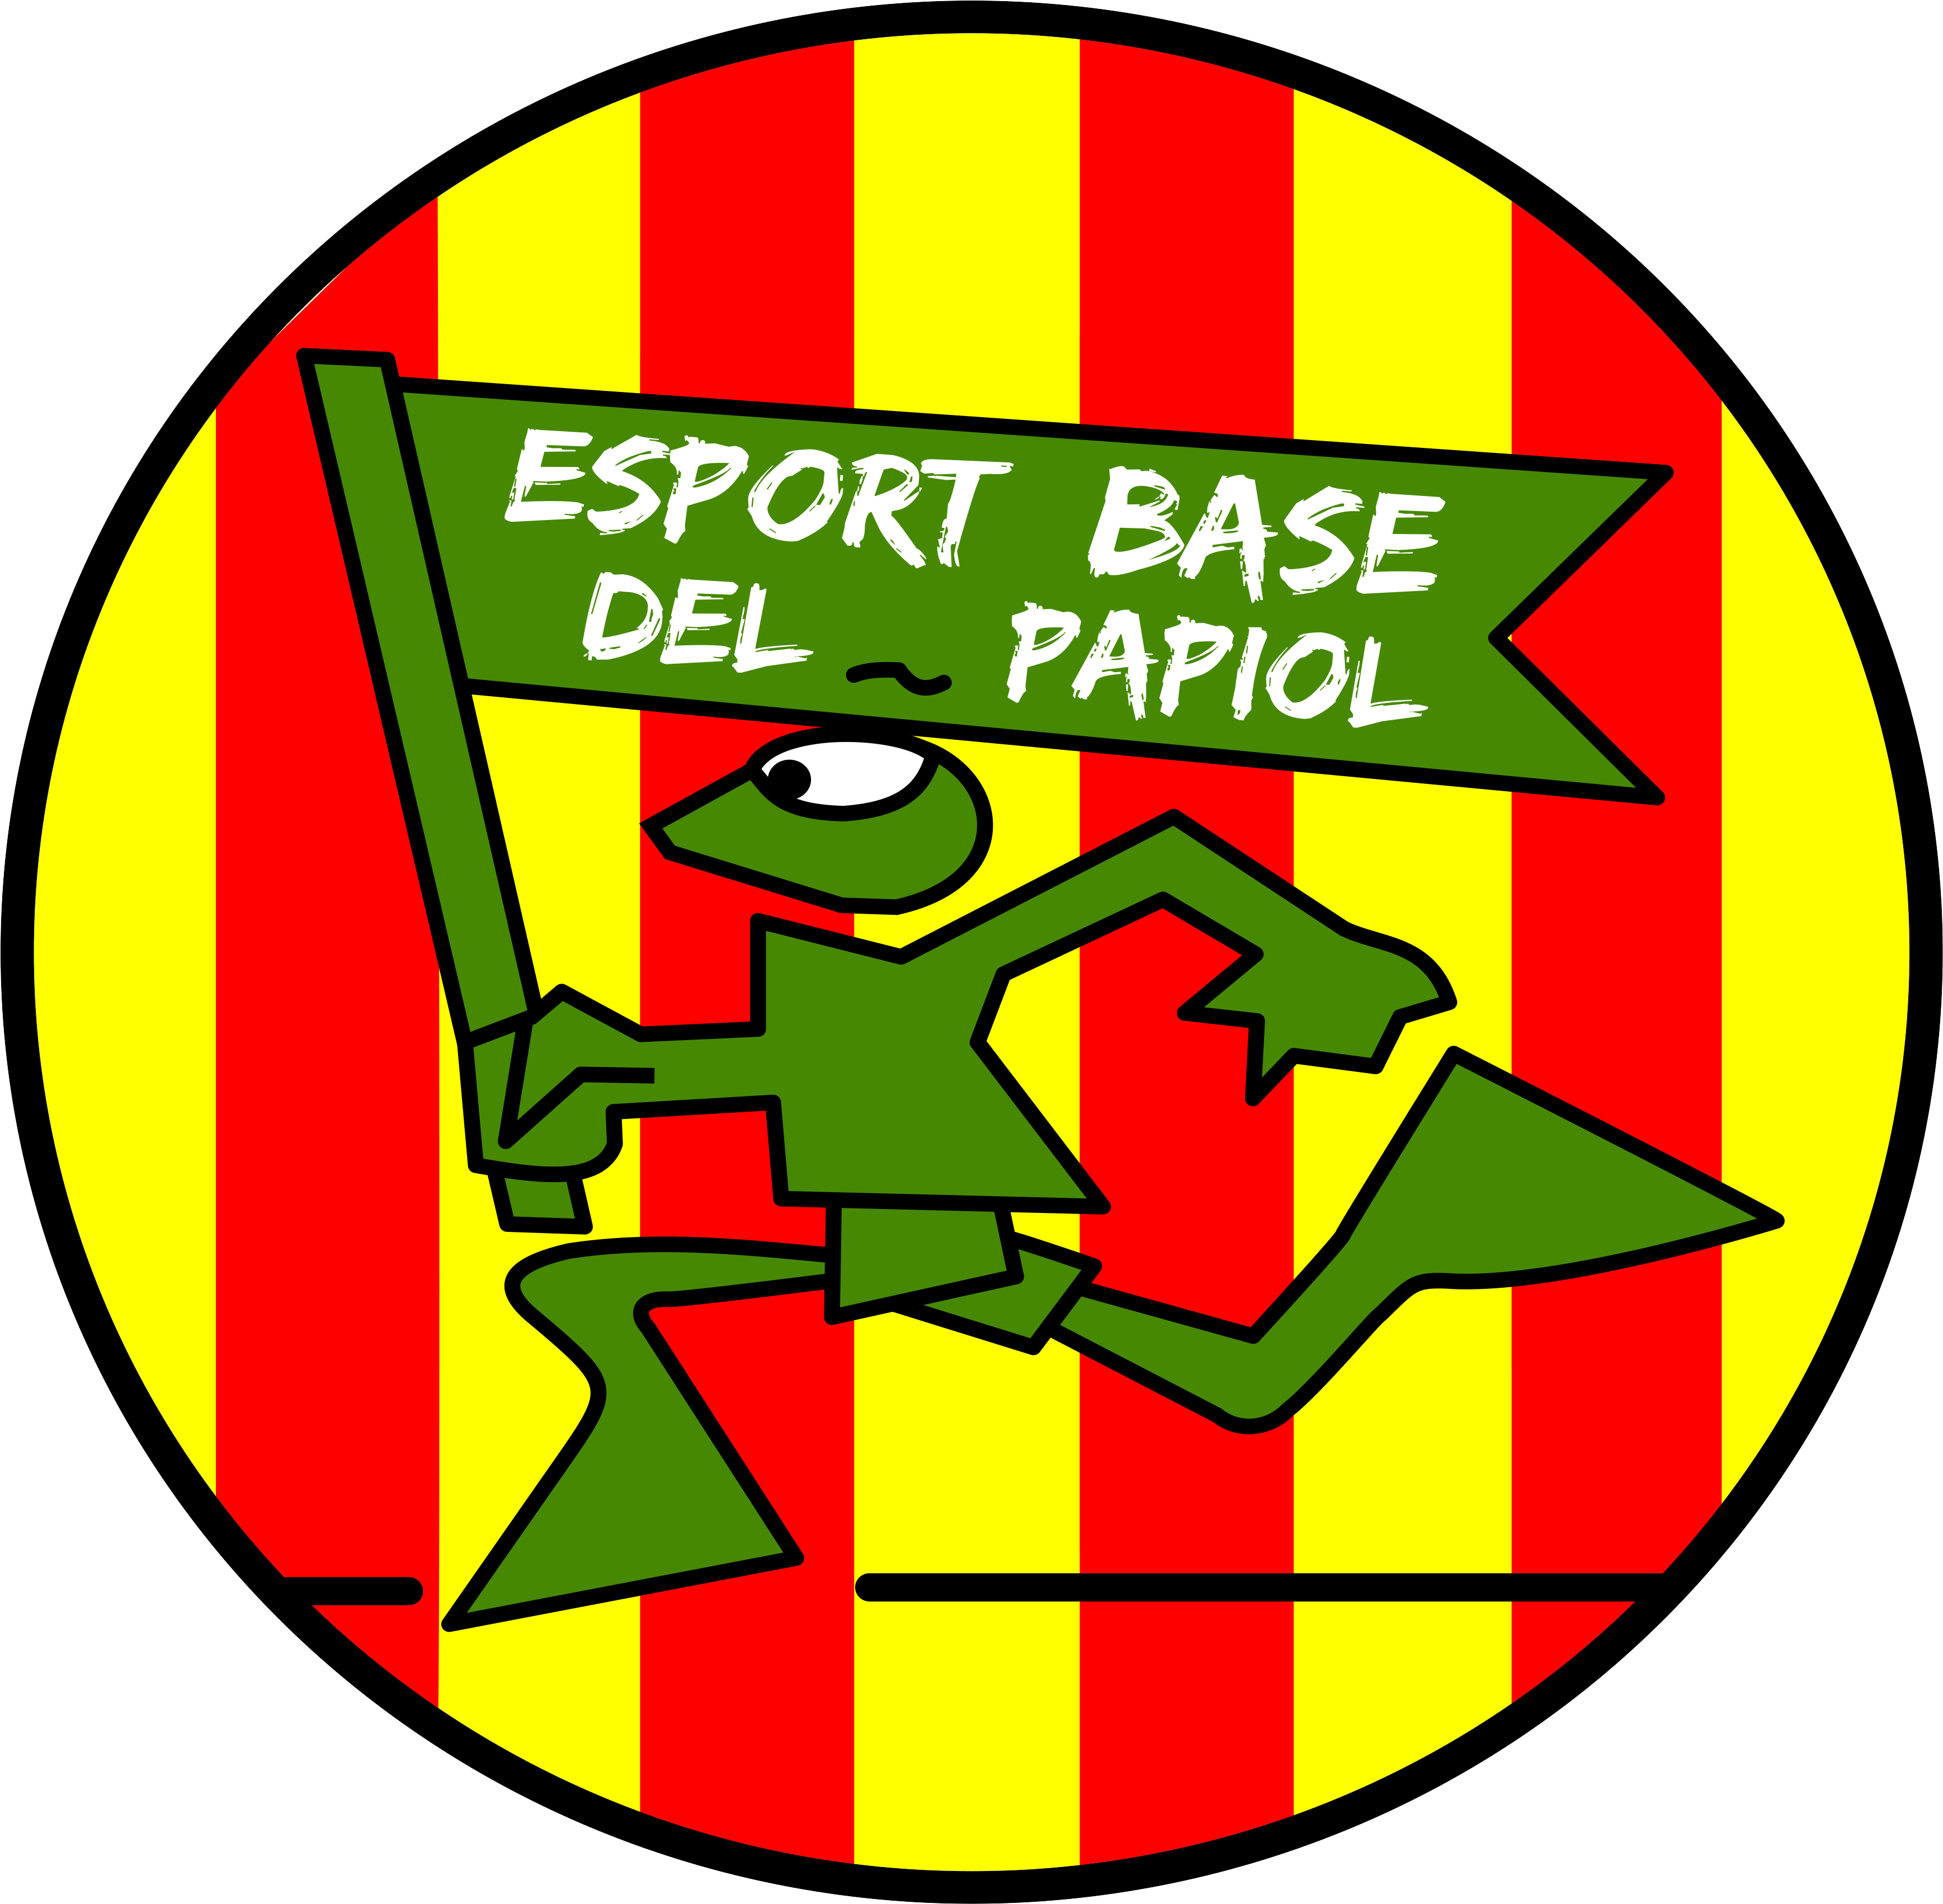 Esport Base del Papiol